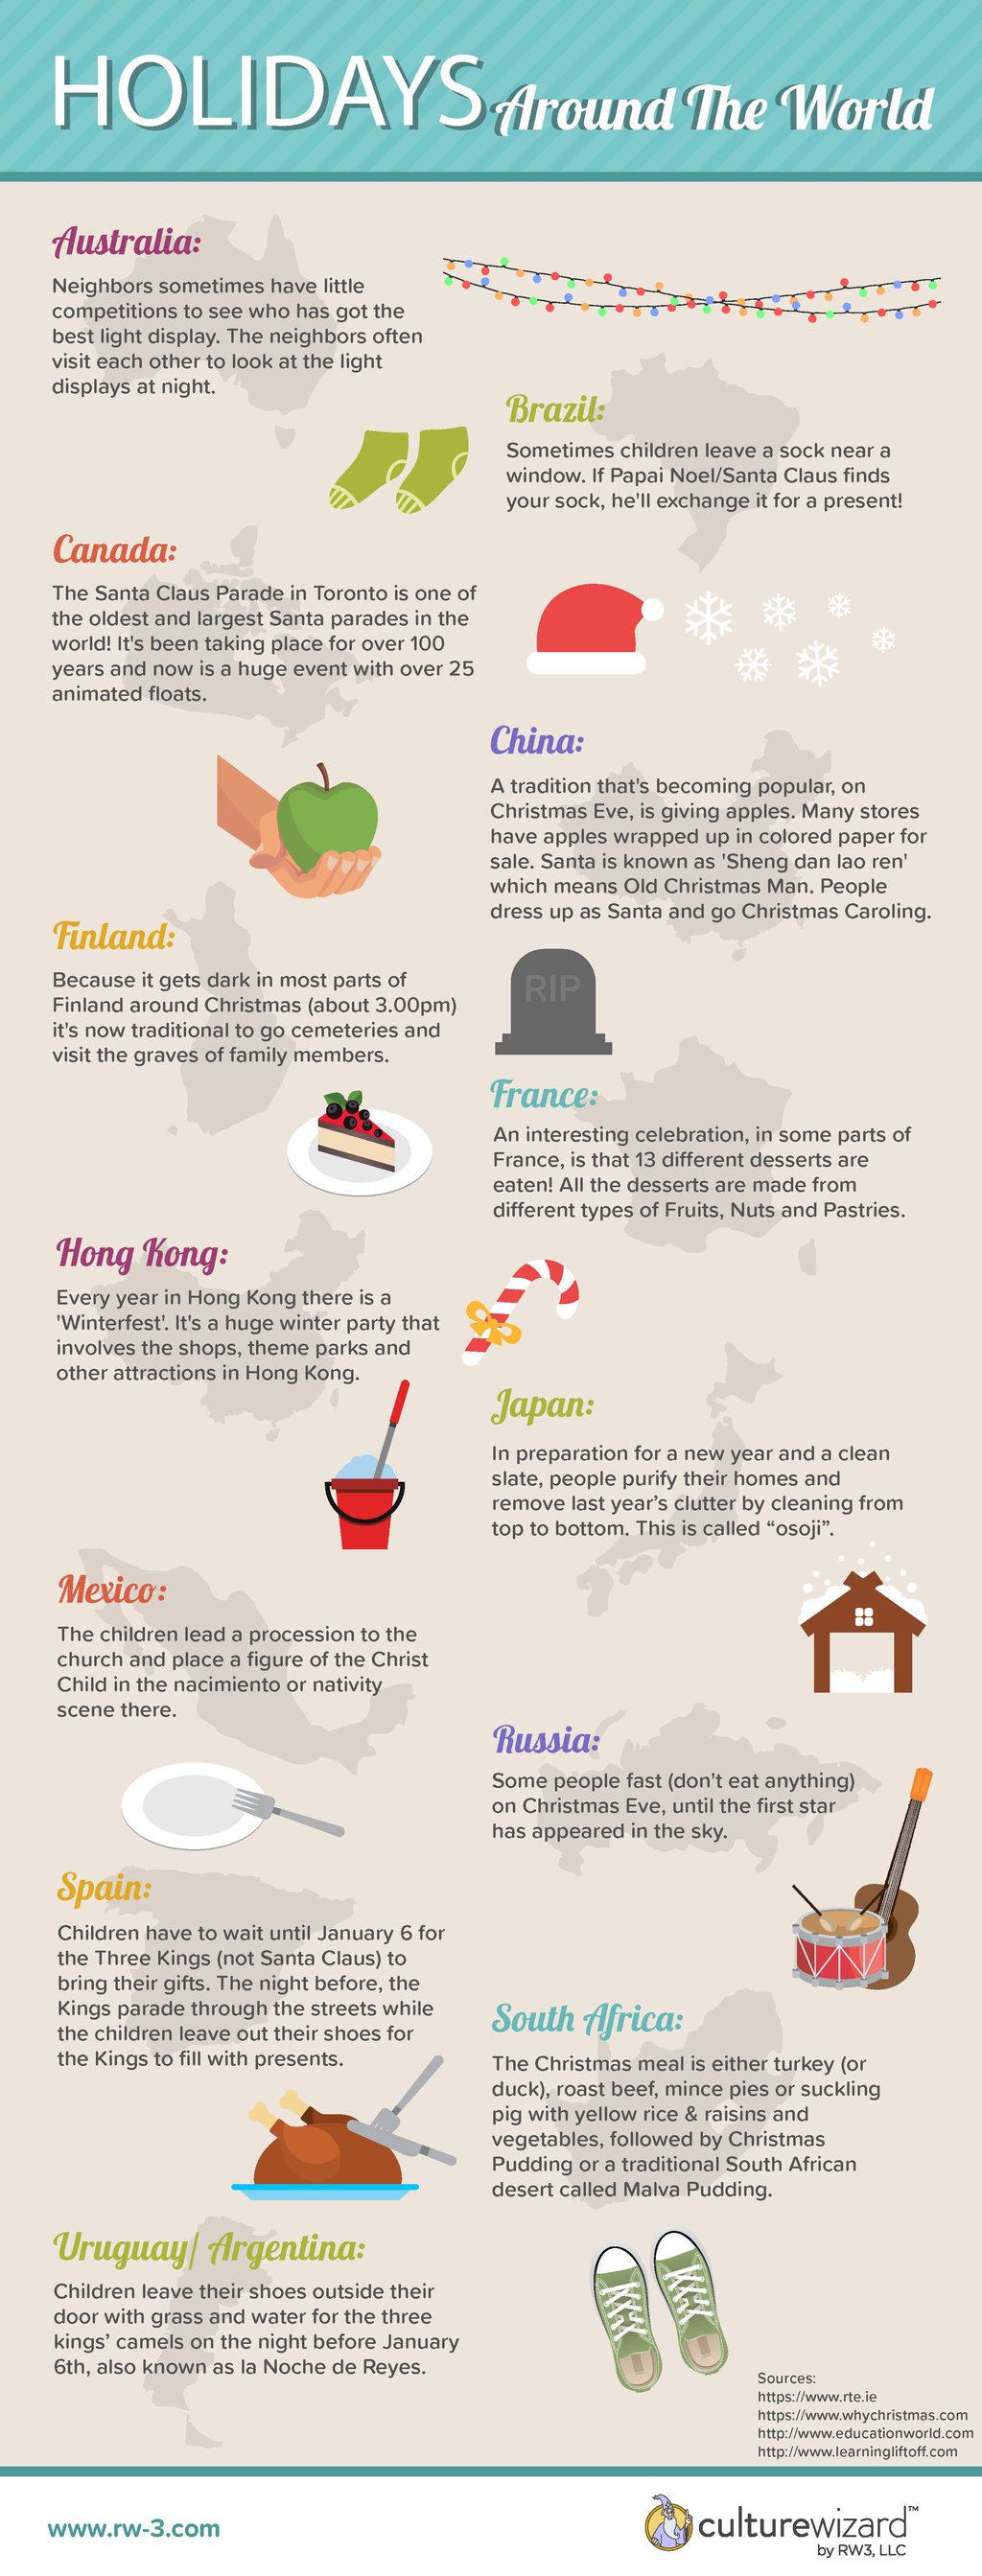 RW3 - Holidays Around the World Infographic-1.jpg